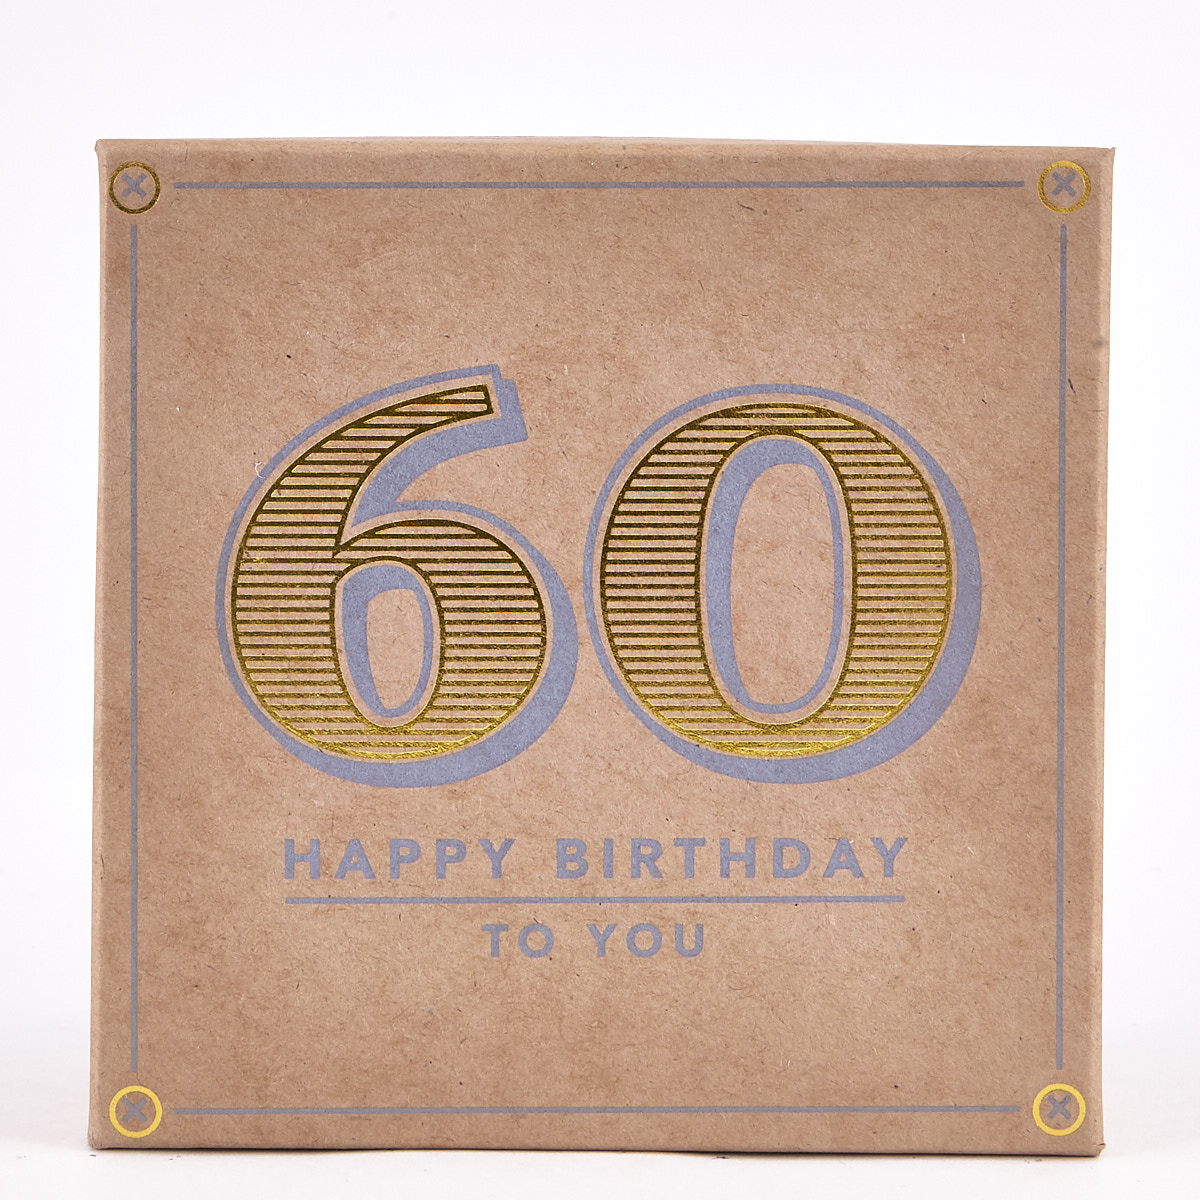 60th Birthday Mug - Classic Collection